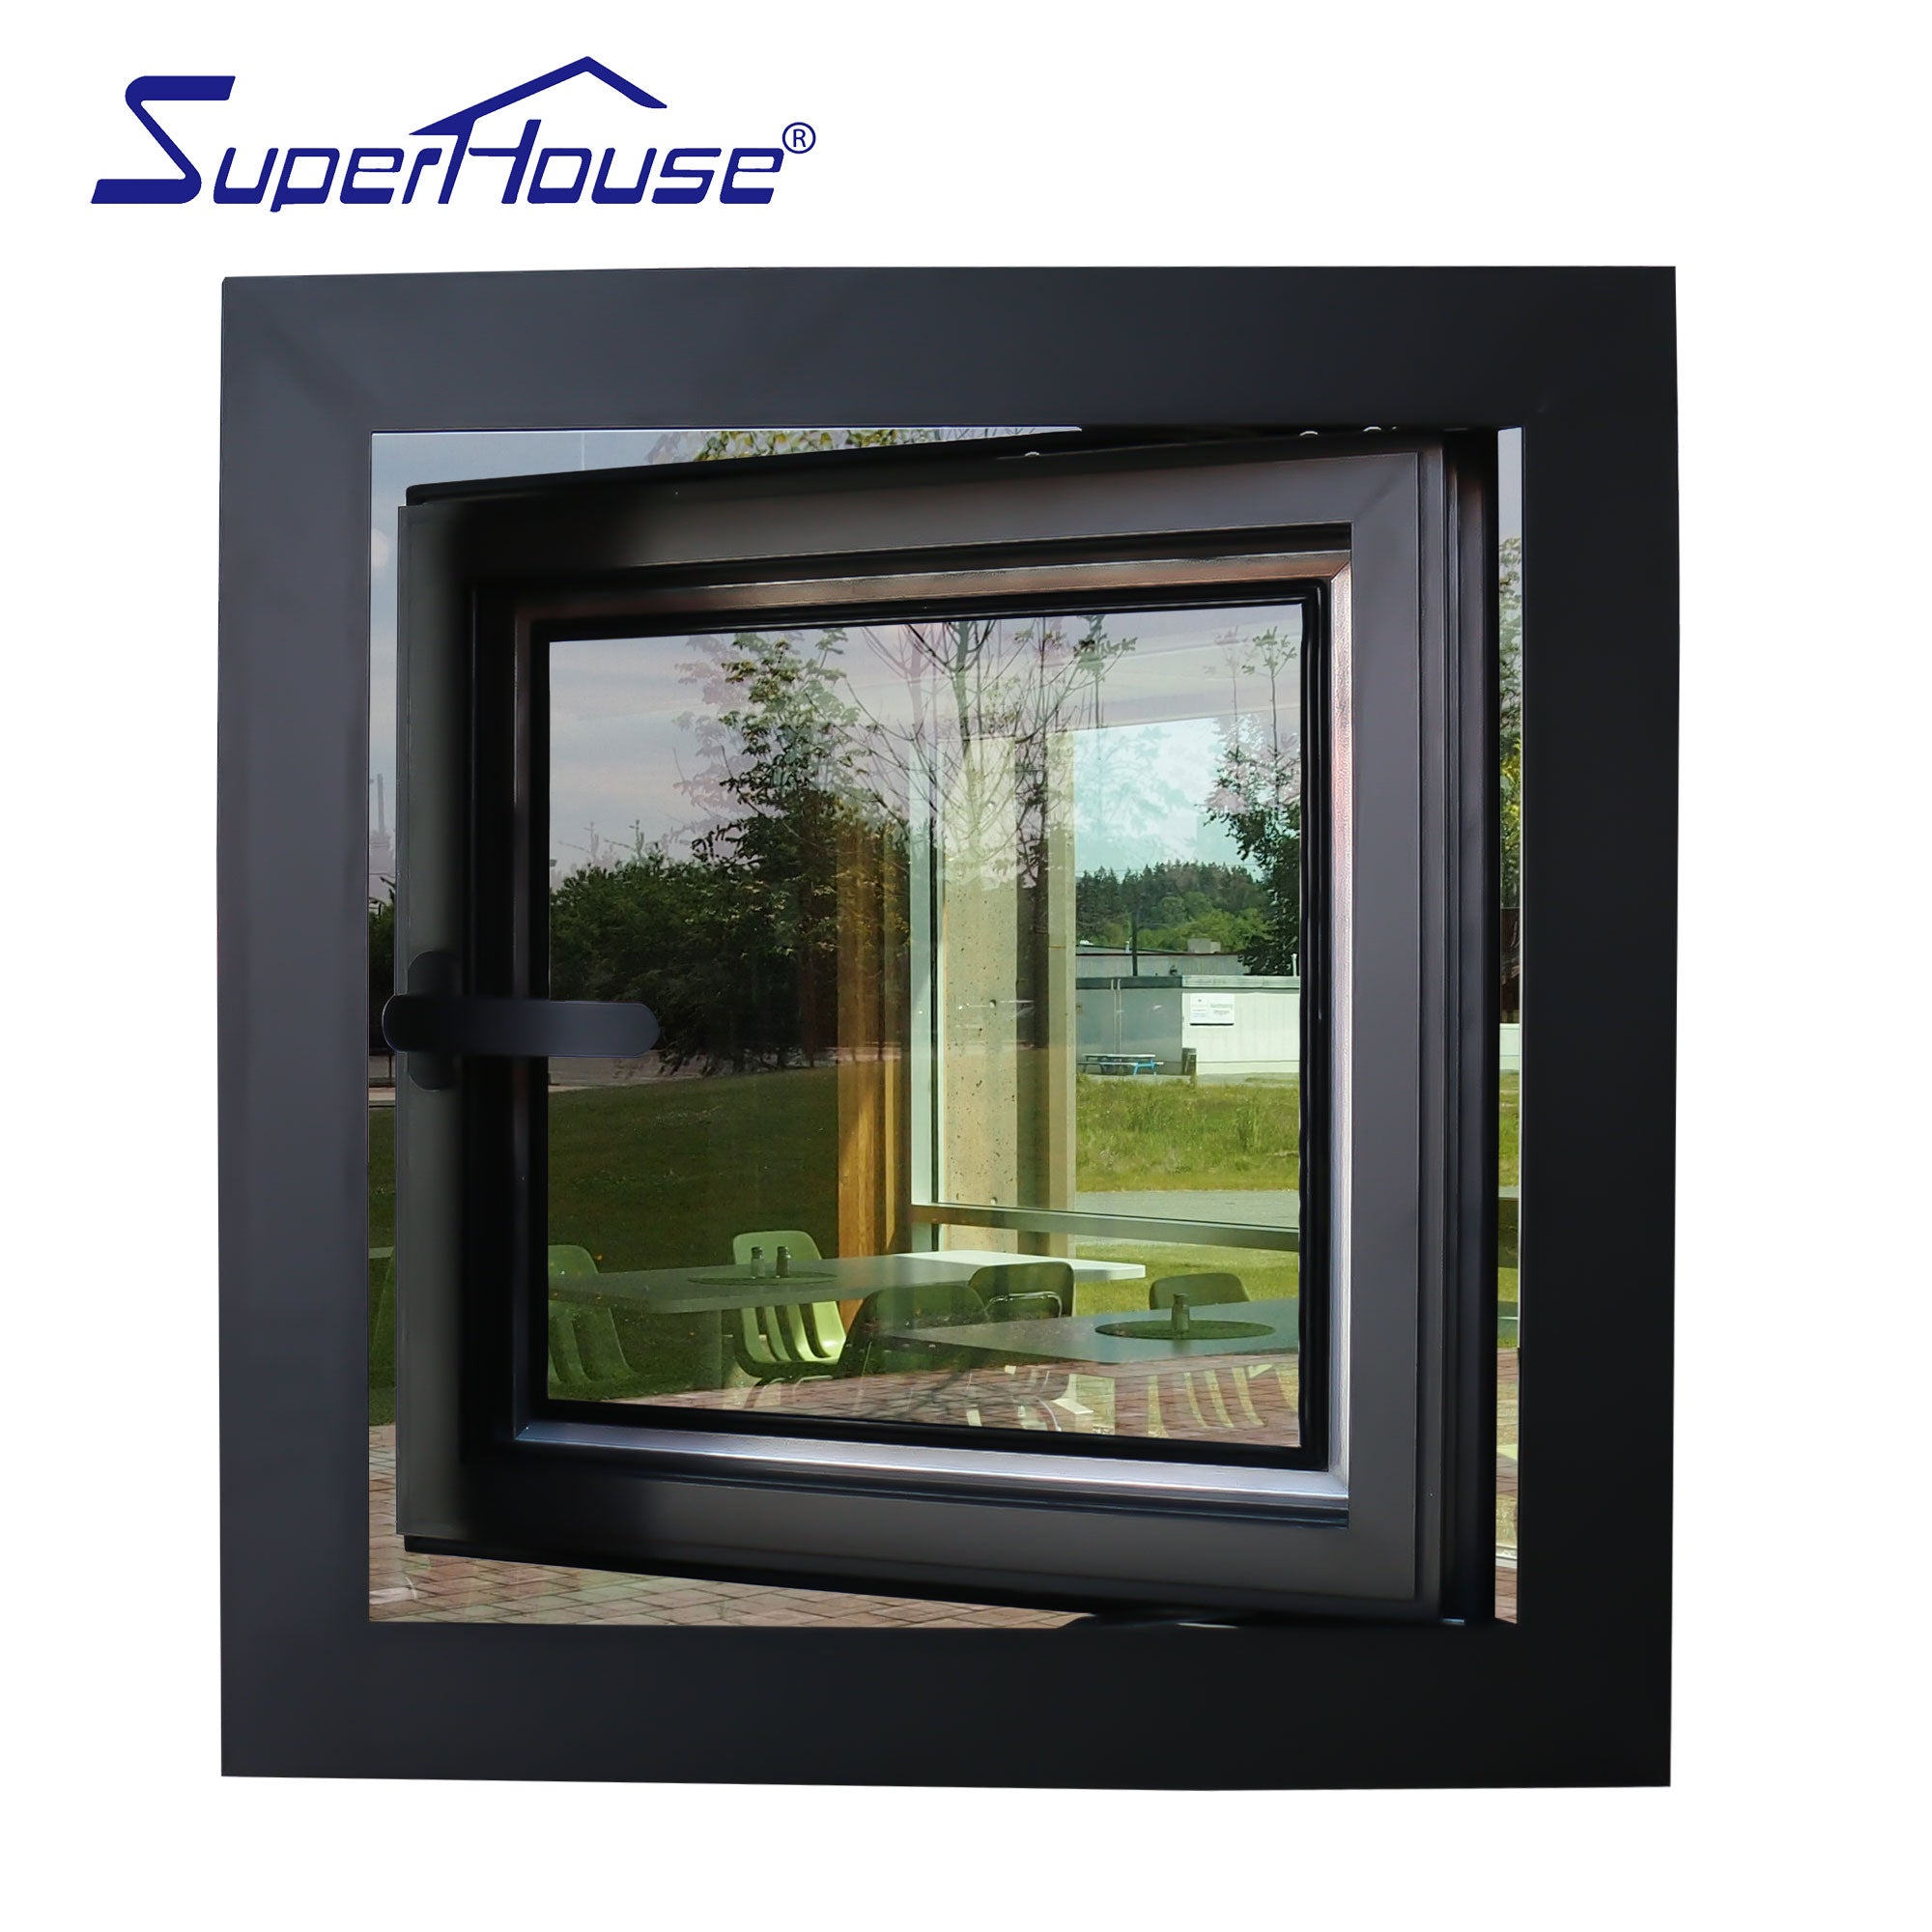 Suerhouse 50 years industry experience High quality energy efficiency aluminium window